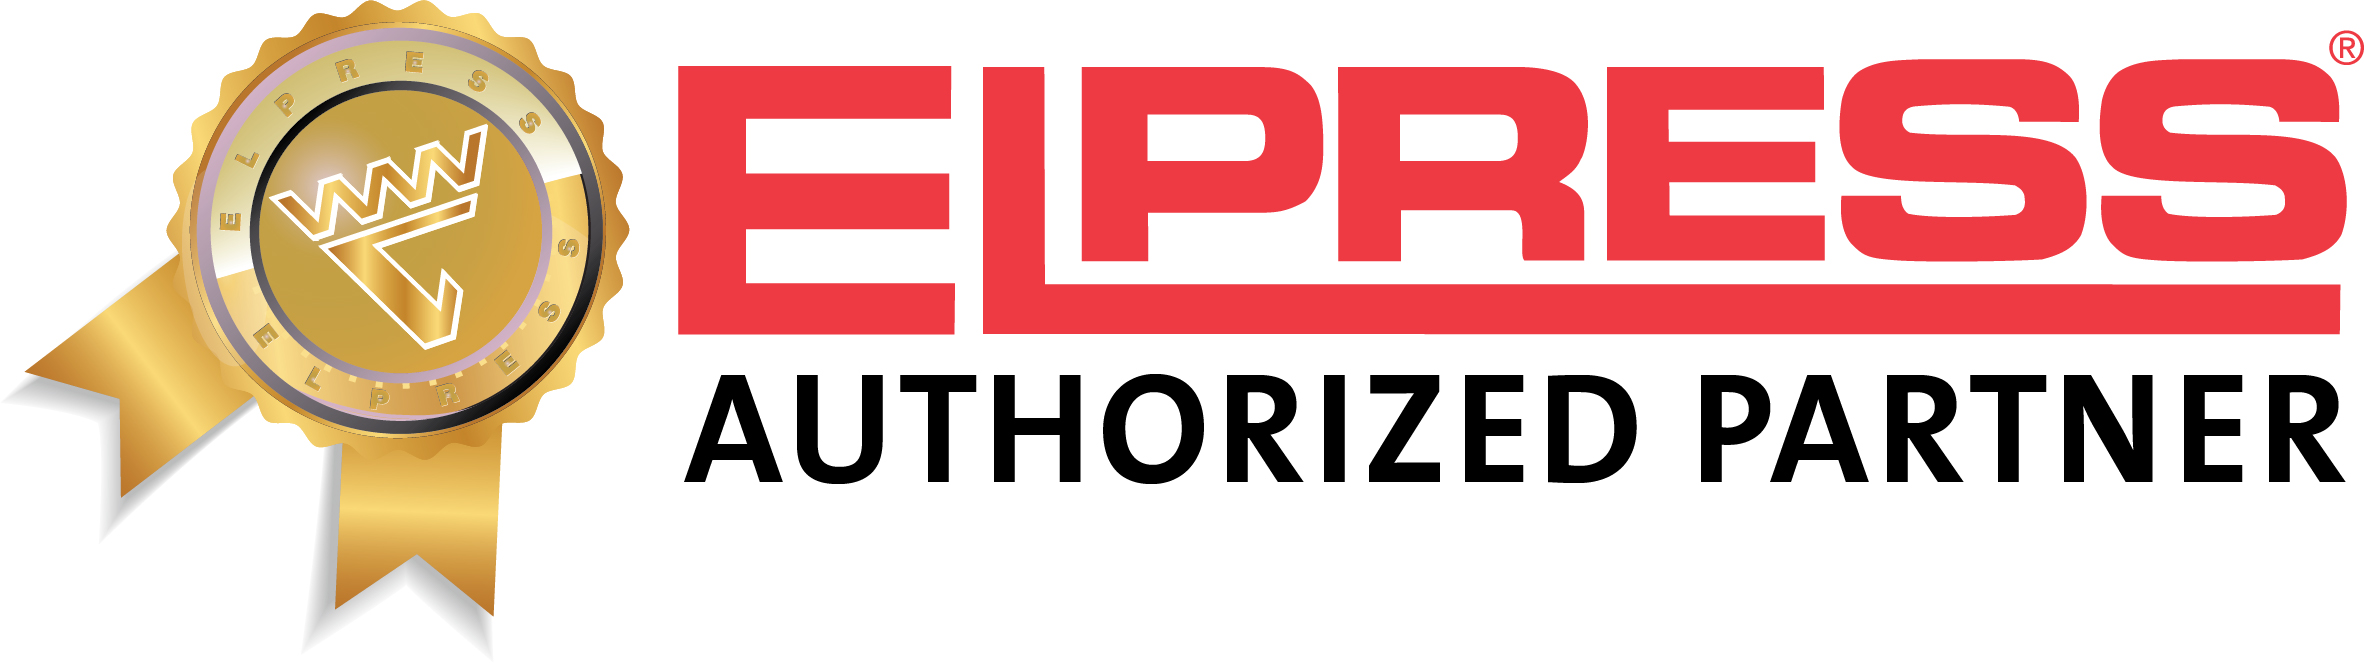 Elpress Authorised Partner - Elpress Supplier - Elpress Distributor